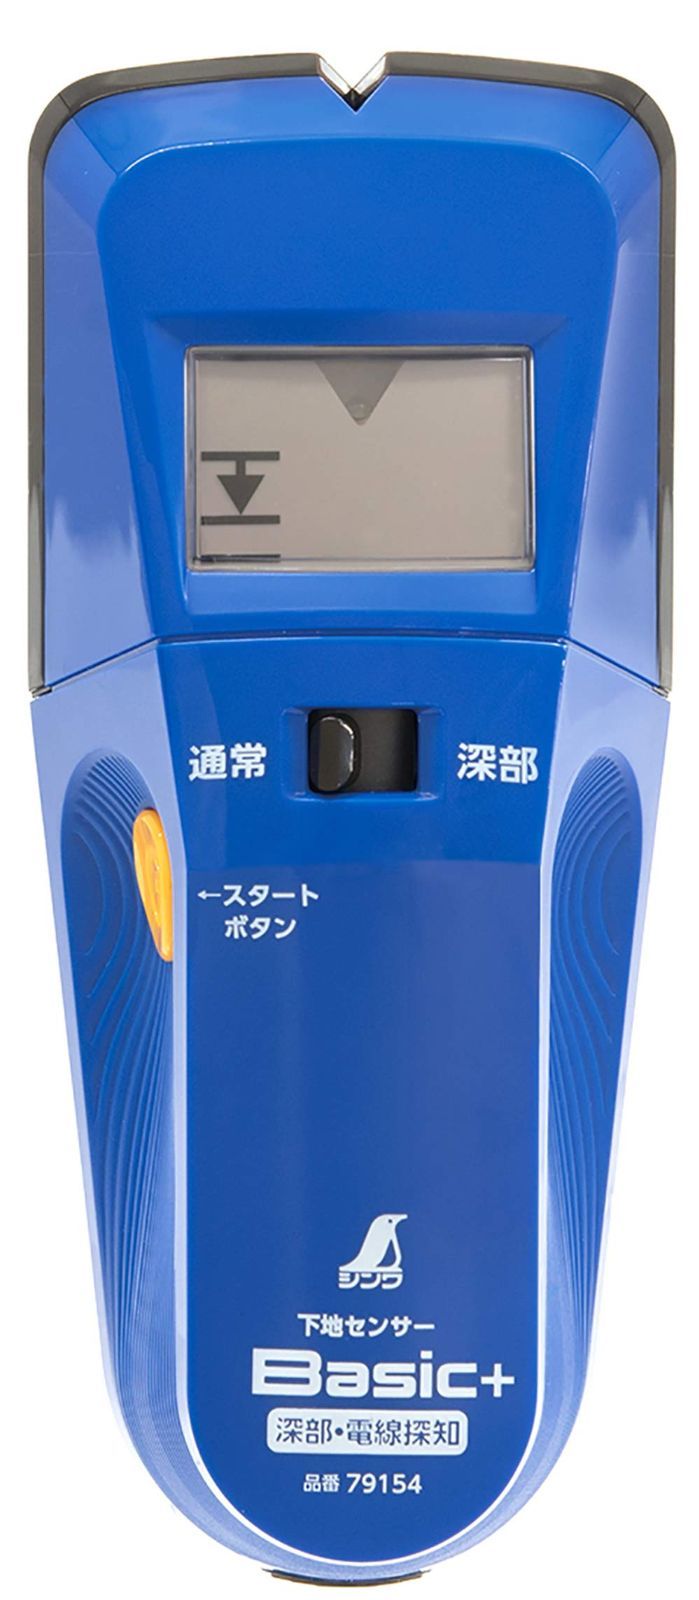 Basic+ 深部・電線探知 液晶表示 79154 シンワ測定(Shinwa Sokutei 